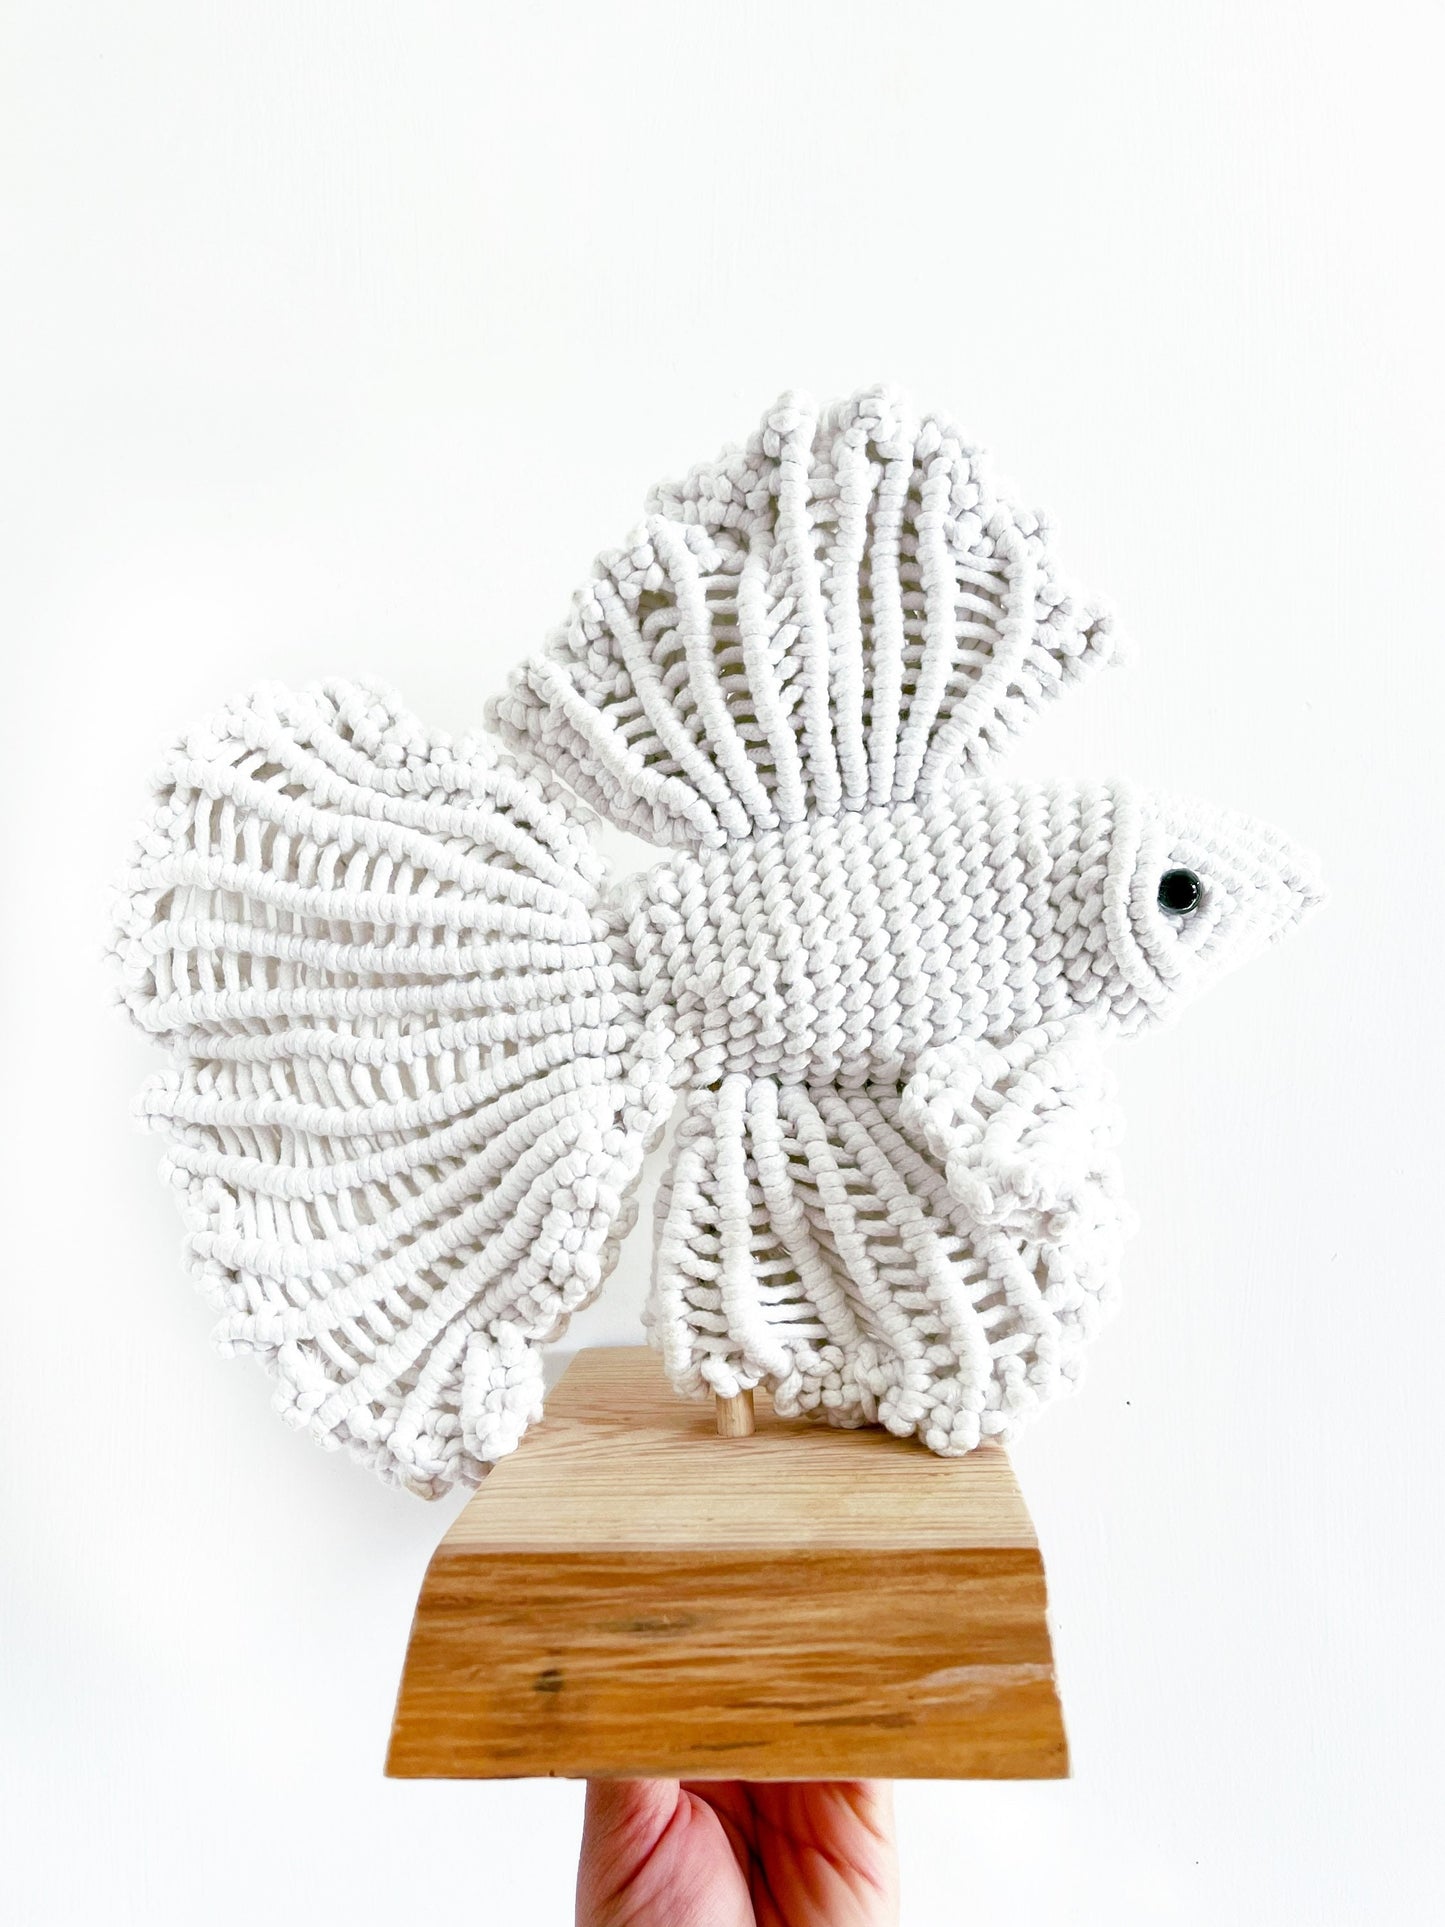 Commission only Art// Betta Fish Art/Fish Art/ Macrame Fish/Macrame Animal/Fiber Sculpture /Fish Art